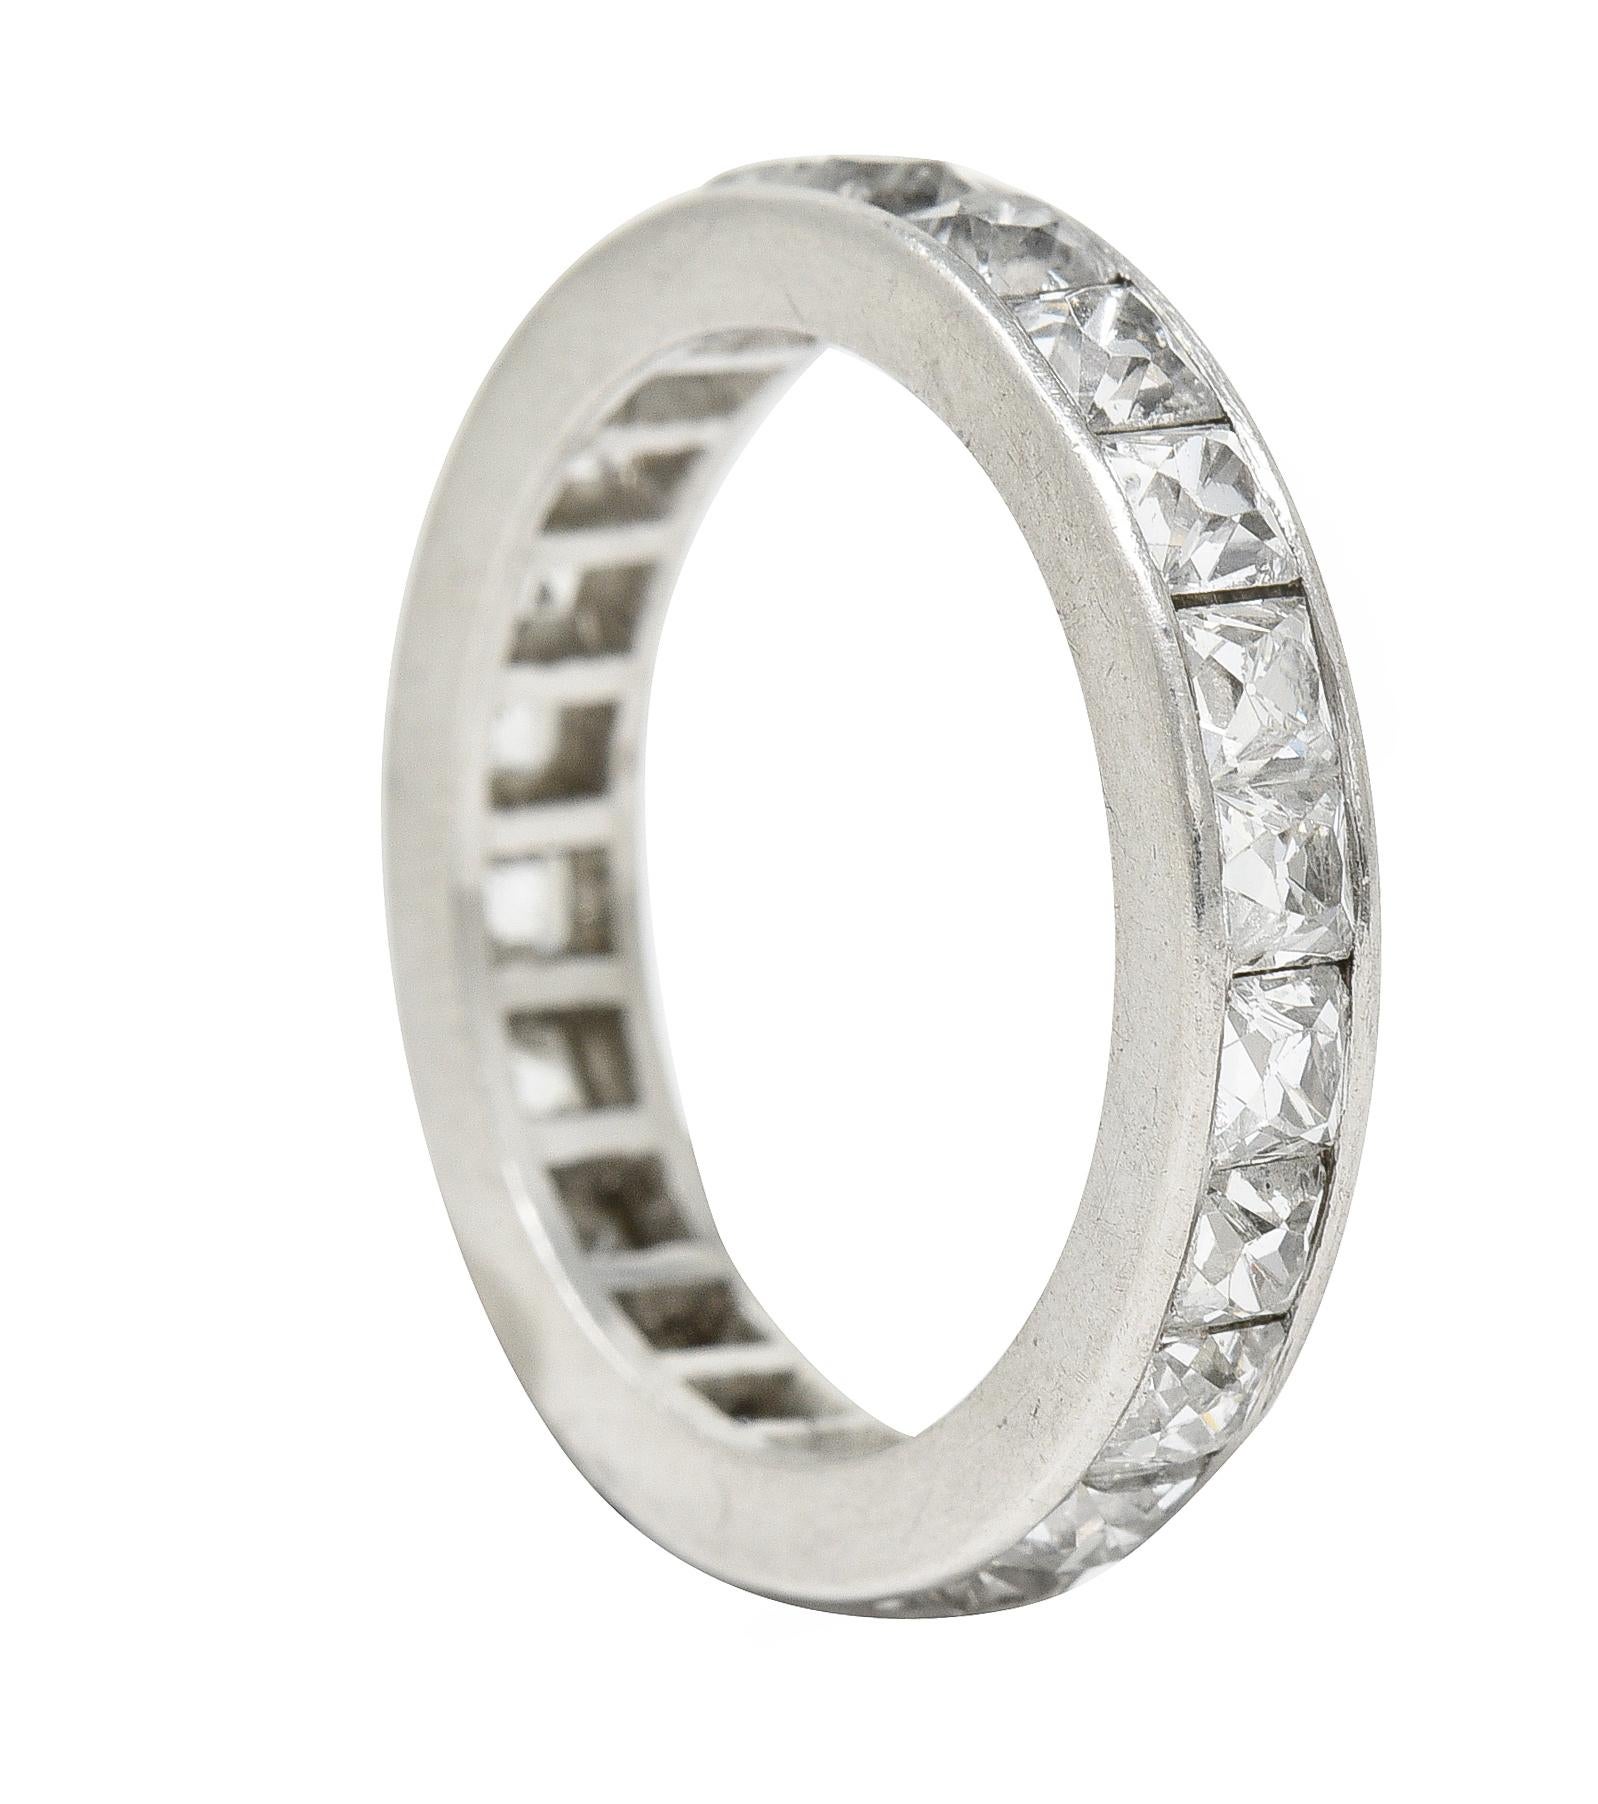 Women's or Men's Art Deco 3.52 CTW French Cut Diamond Platinum Band Vintage Wedding Ring For Sale